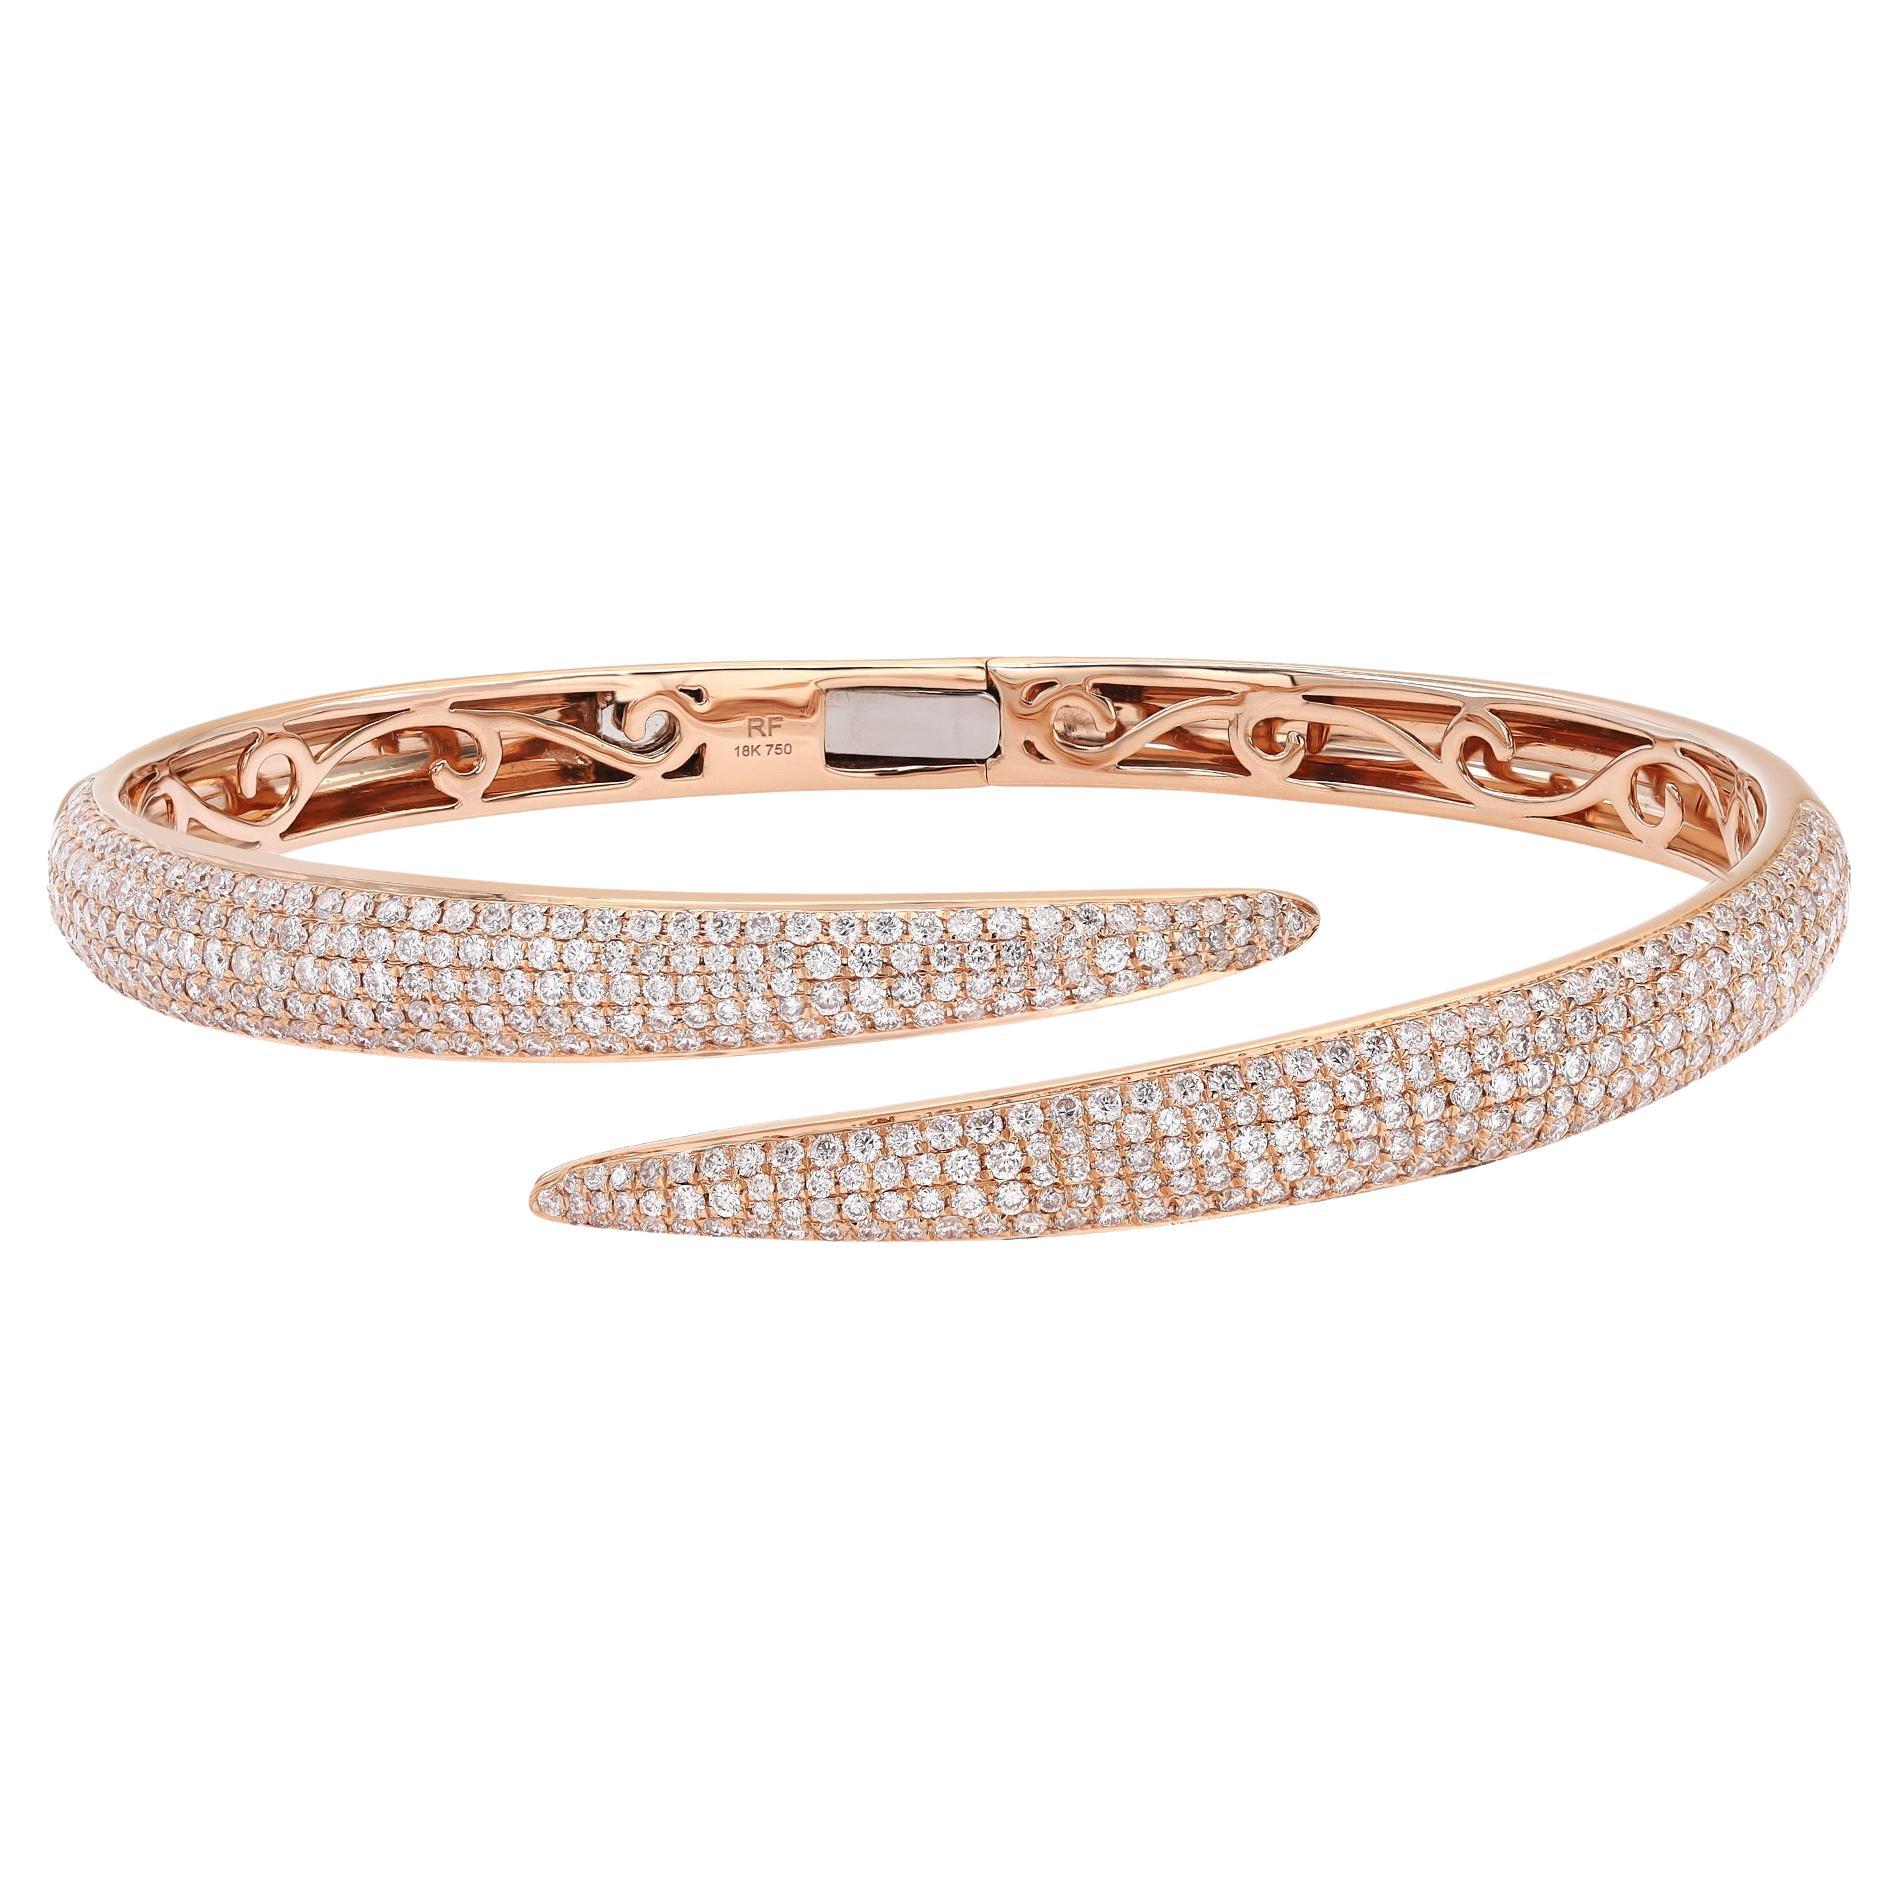 Rachel Koen Pave Set Round Cut Diamond Bangle Bracelet 18K Rose Gold 2.68cttw For Sale